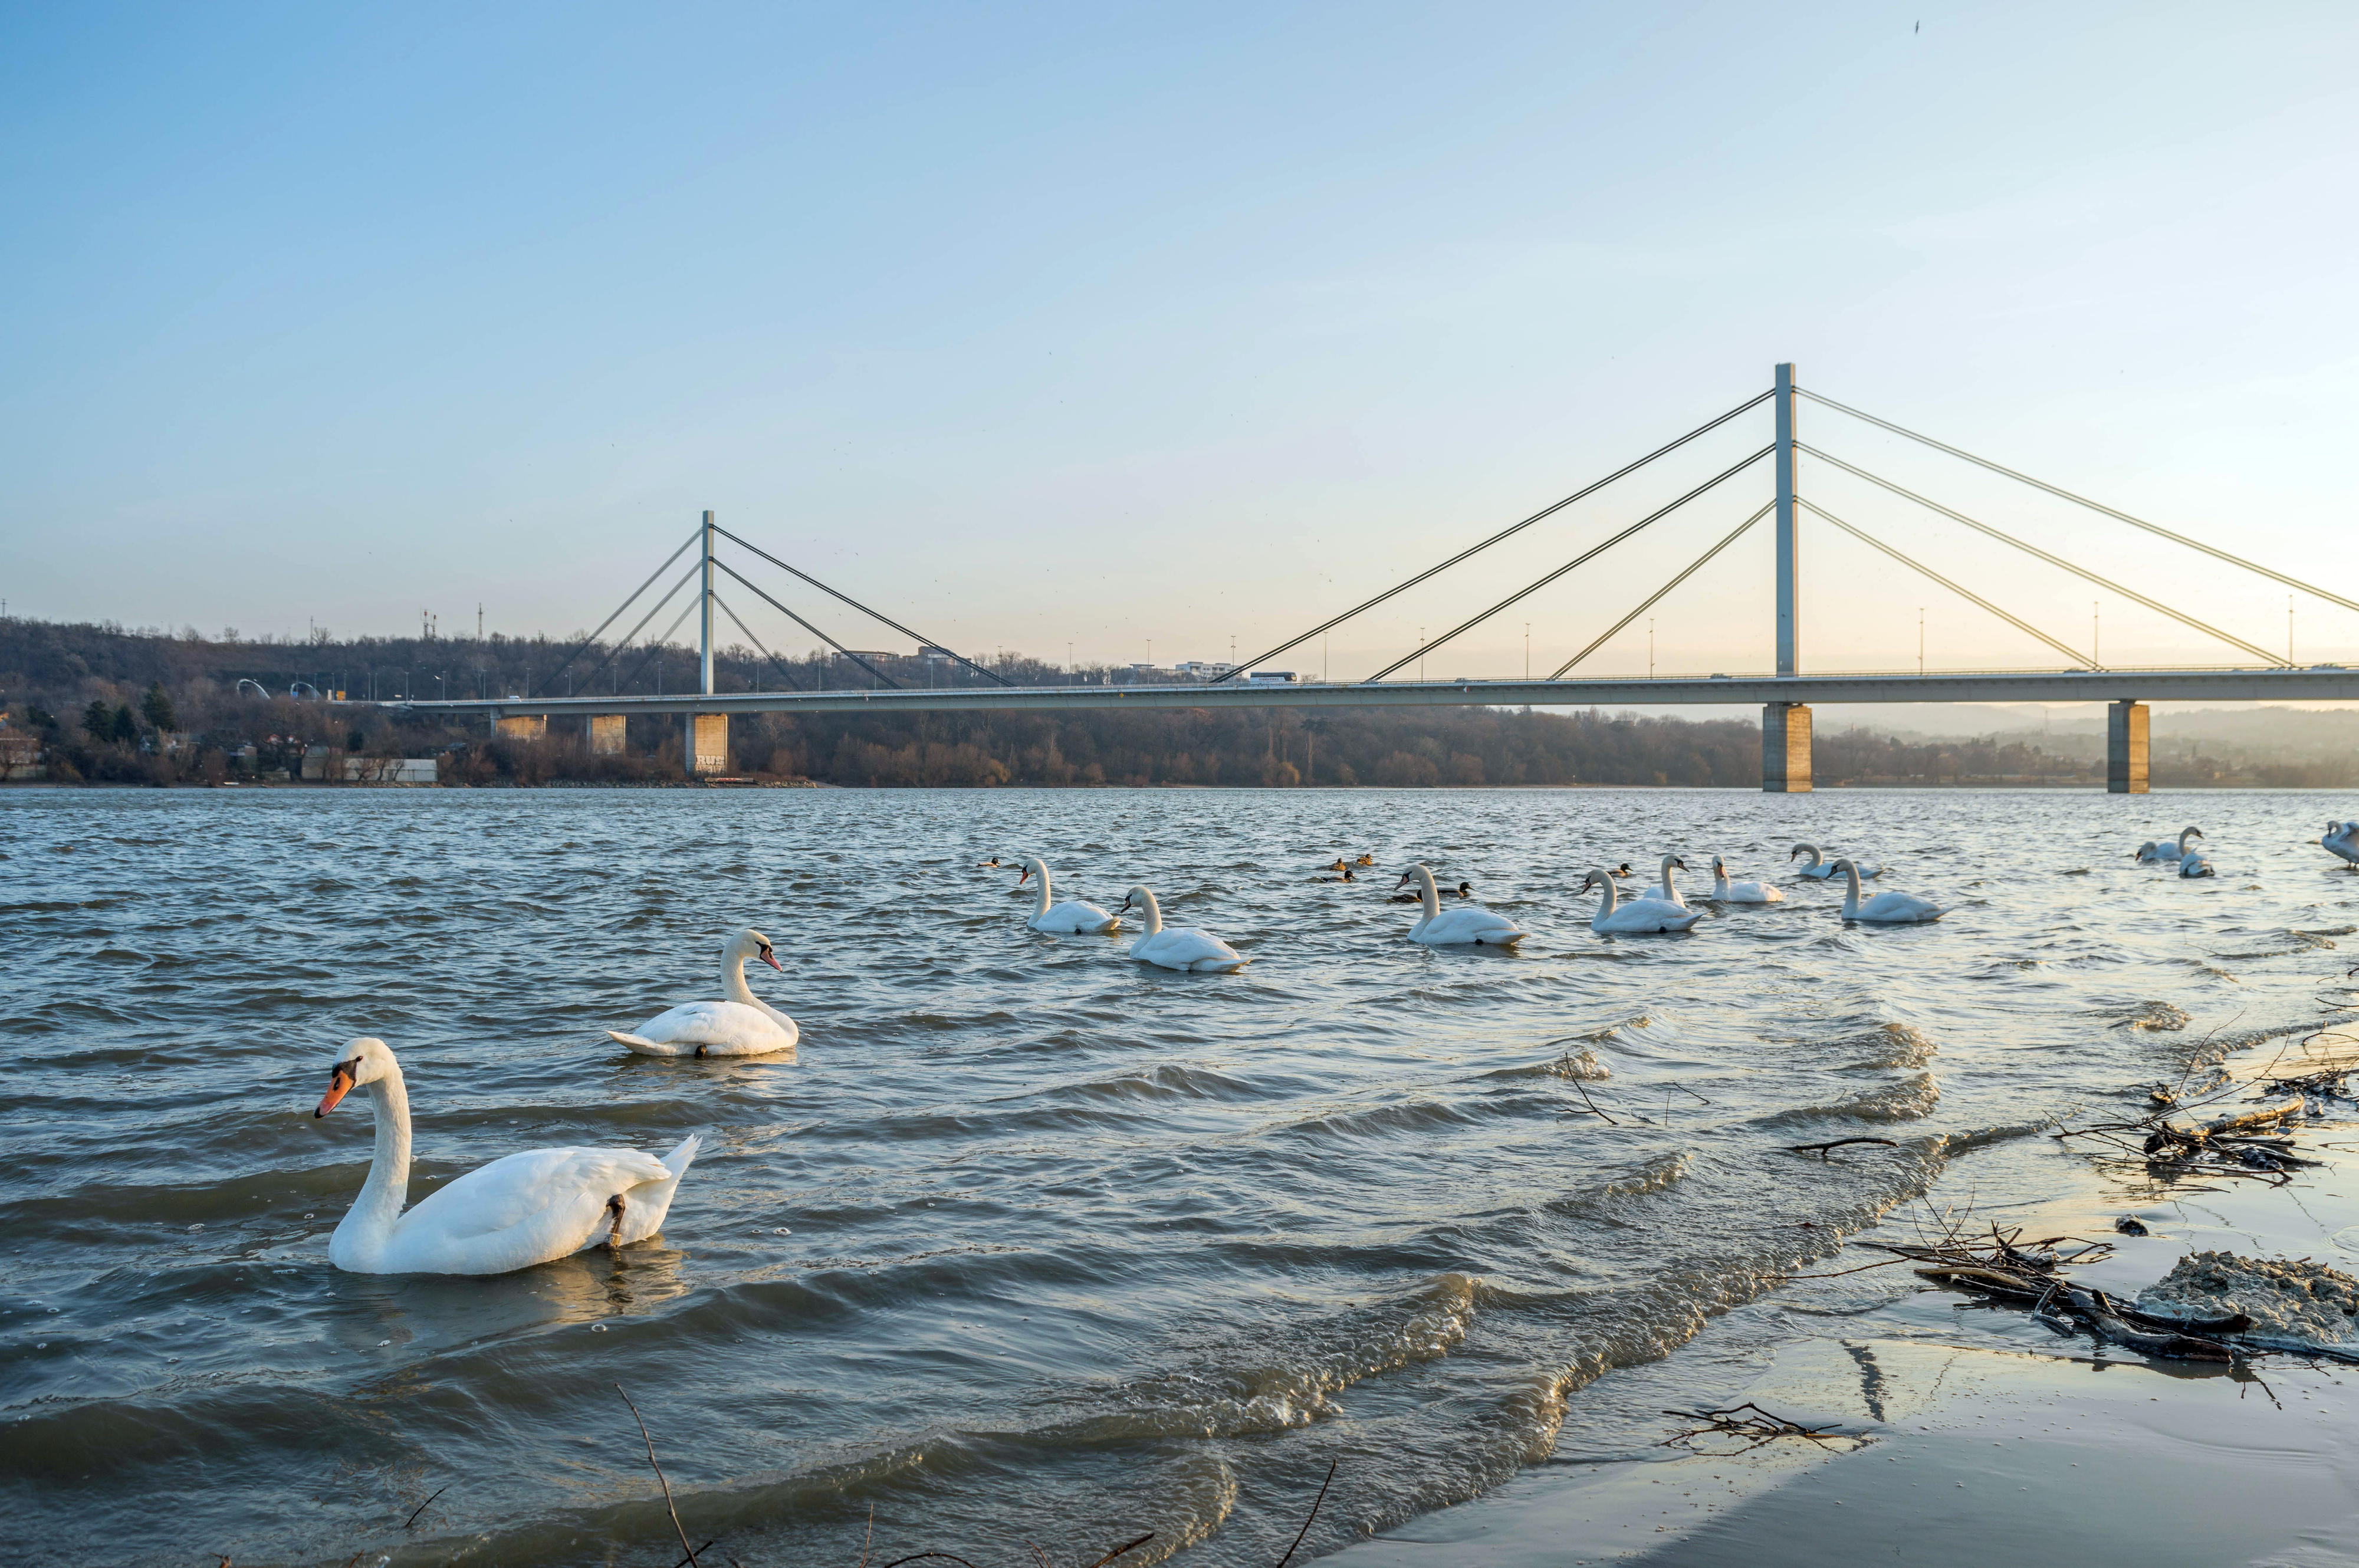 The Freedom Bridge across the Danube near Novi Sad, Serbia